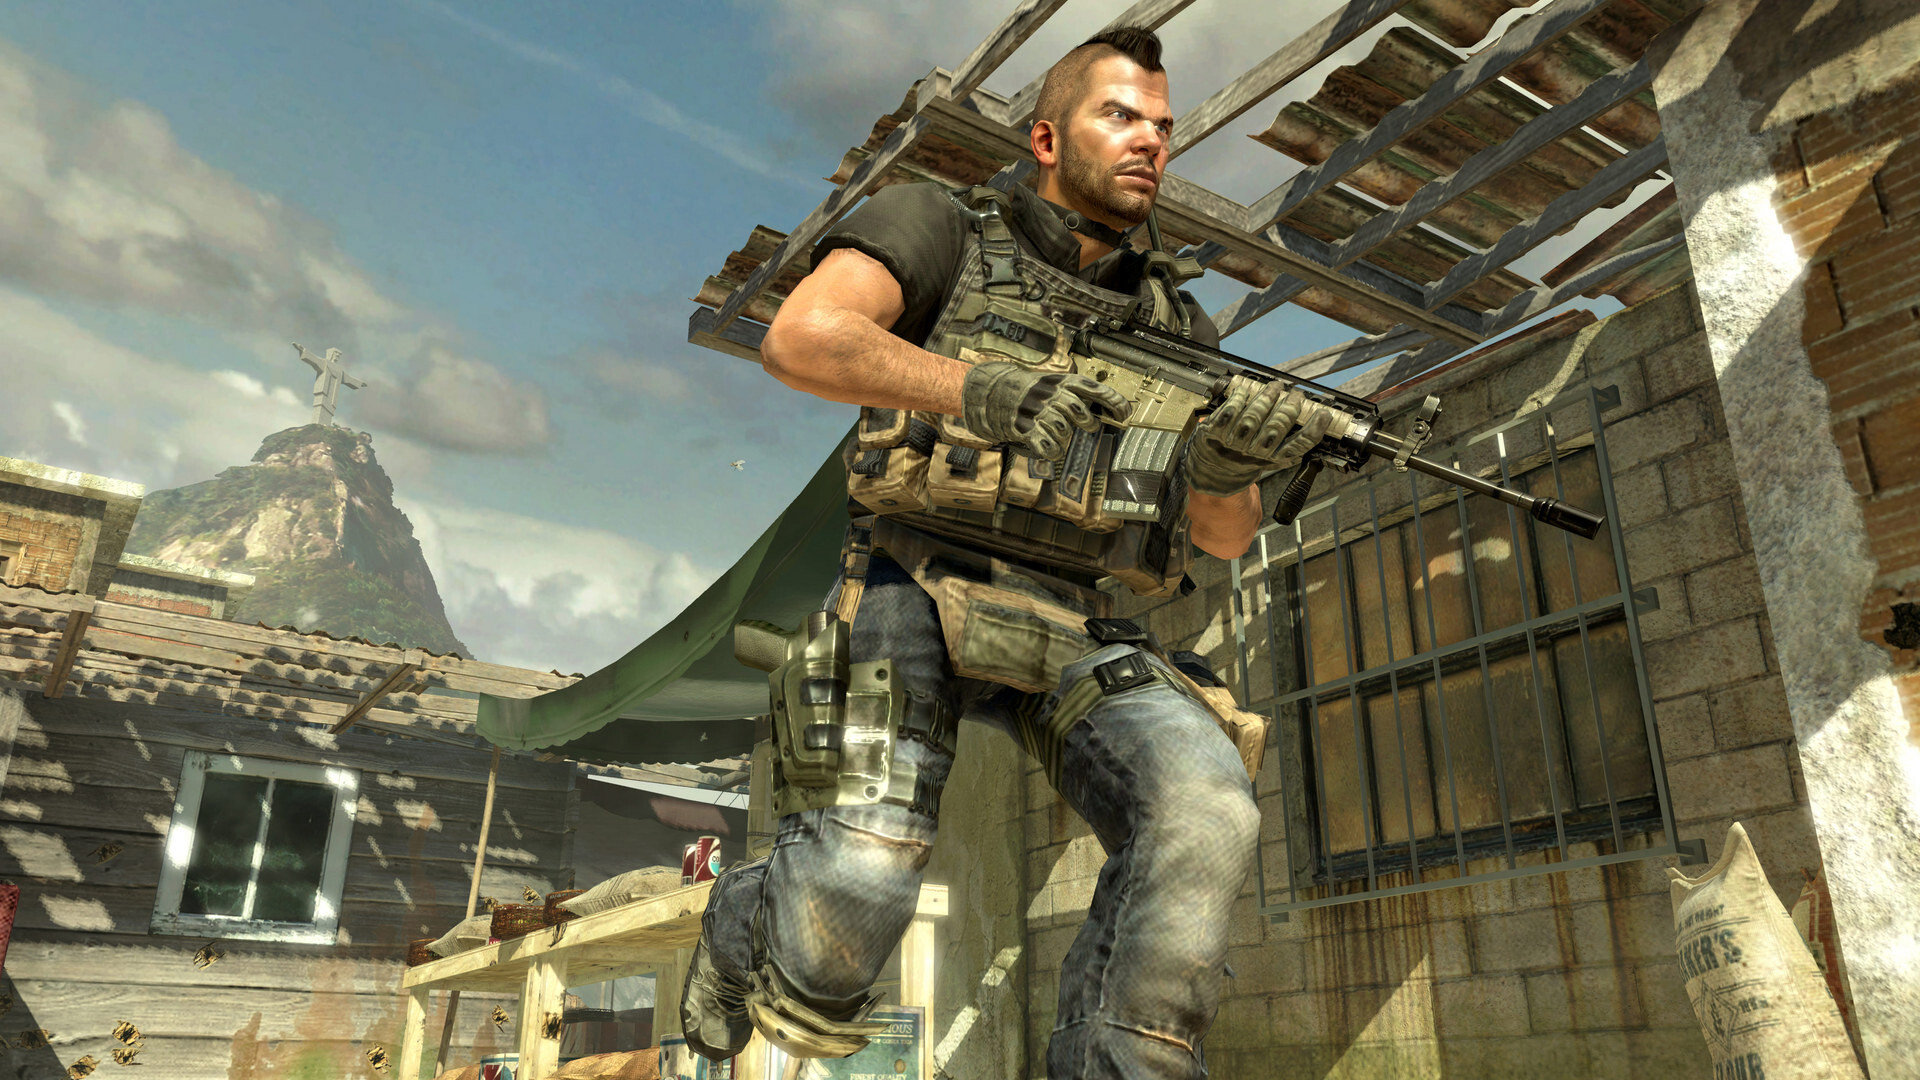 Call of Duty Modern Warfare 2 Vault Edition (2022) (PC) Key cheap